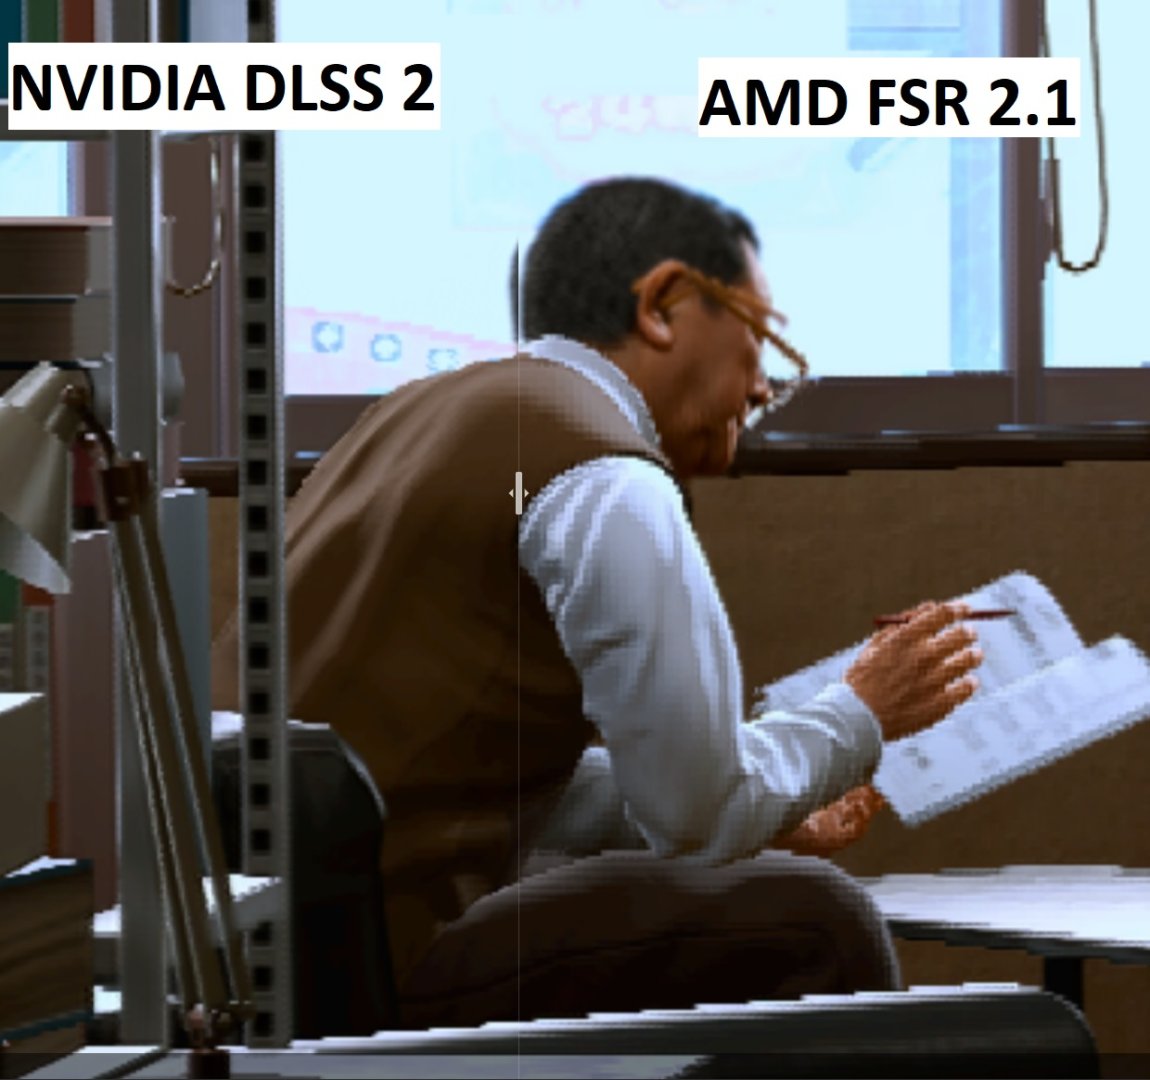 AMD FSR 2.1 vs NVIDIA DLSS 2 comparison zoom-1